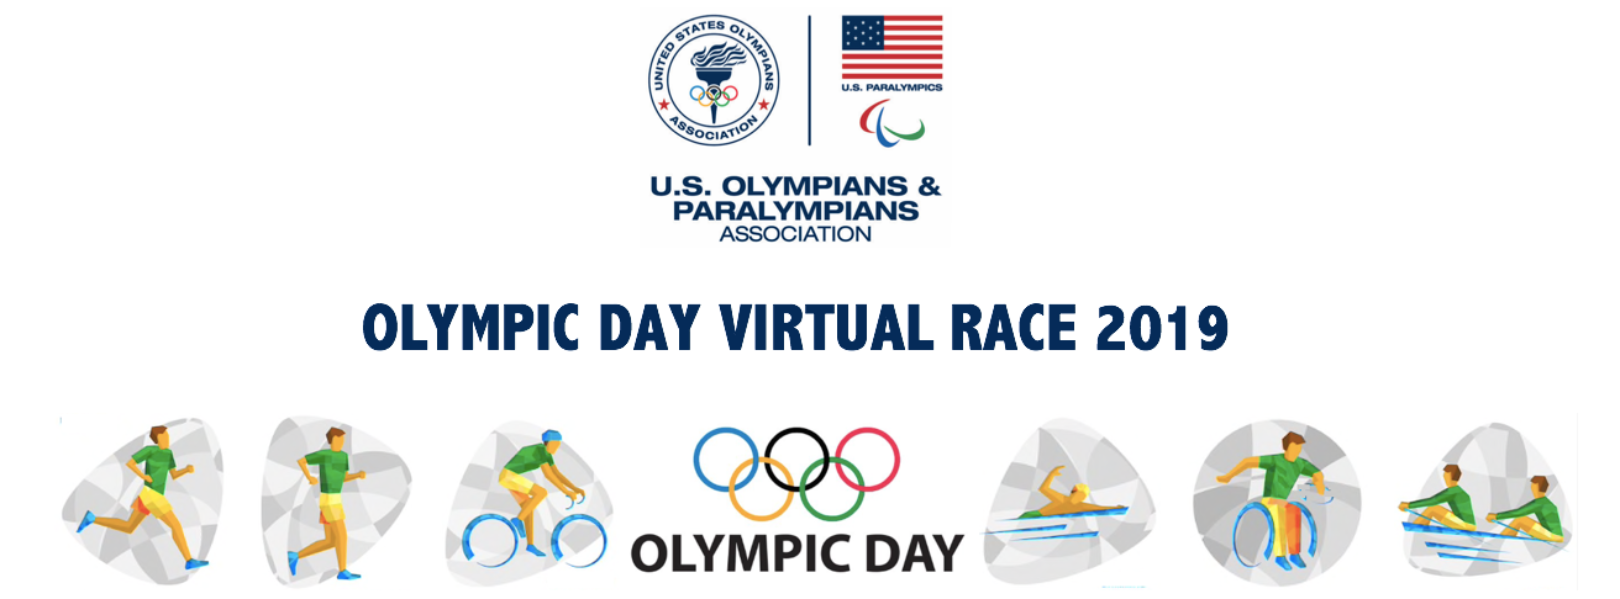 Olympic Day Virtual Race 2019